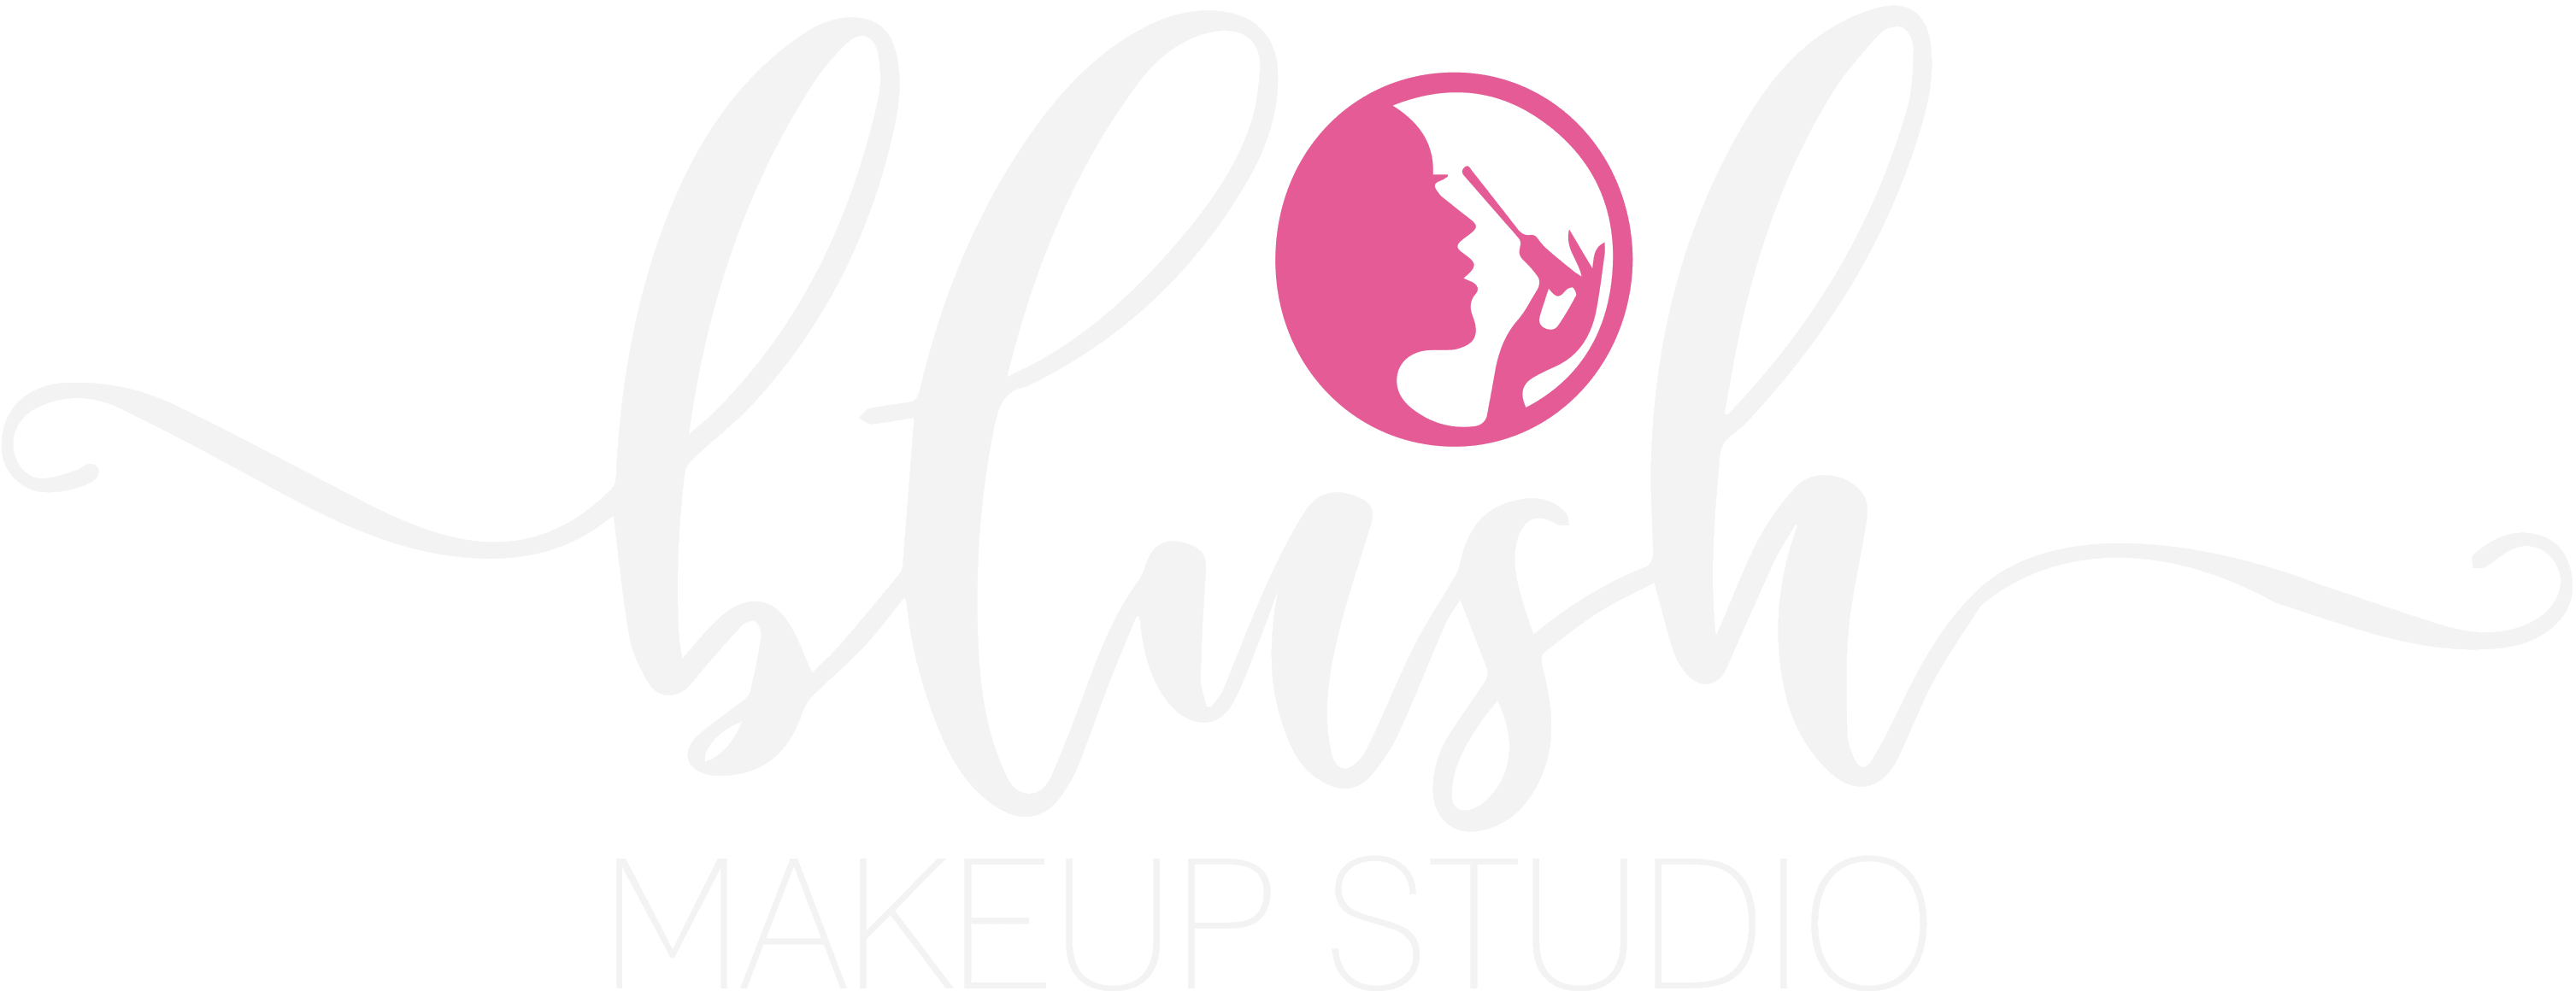 Blush Make Up Studio